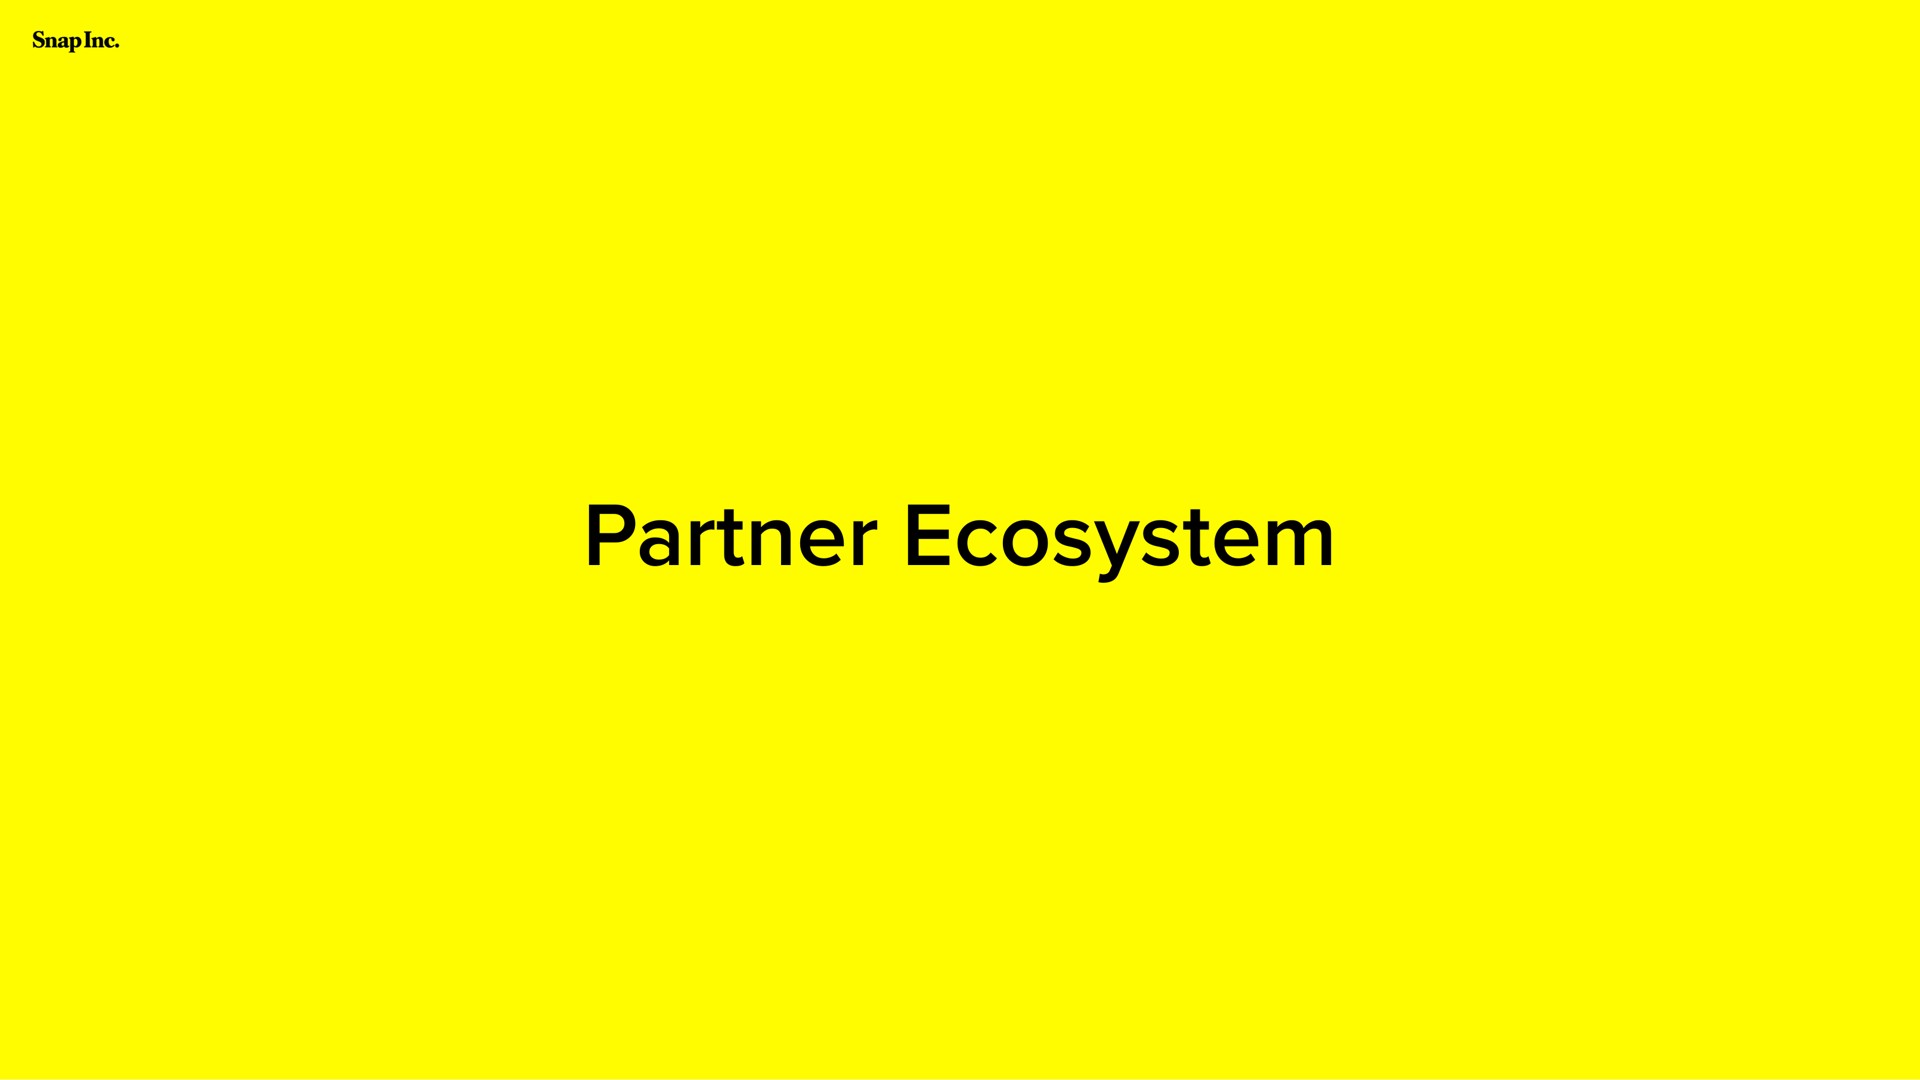 partner ecosystem | Snap Inc